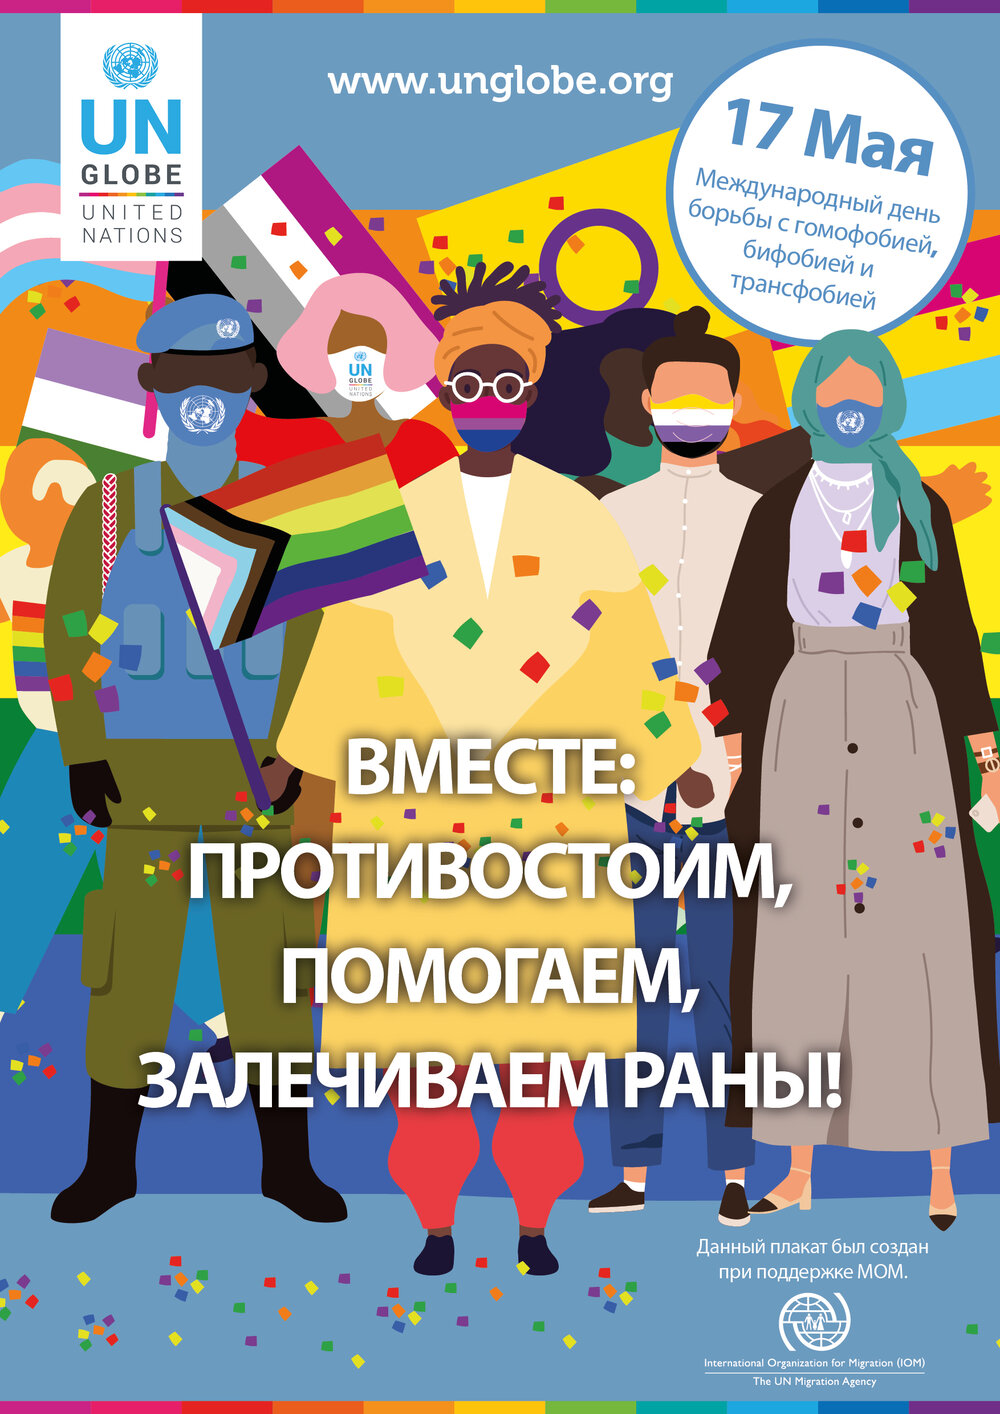 UN_GLOBE_IDAHOBIT_2021_Social_Media_RUS.jpg